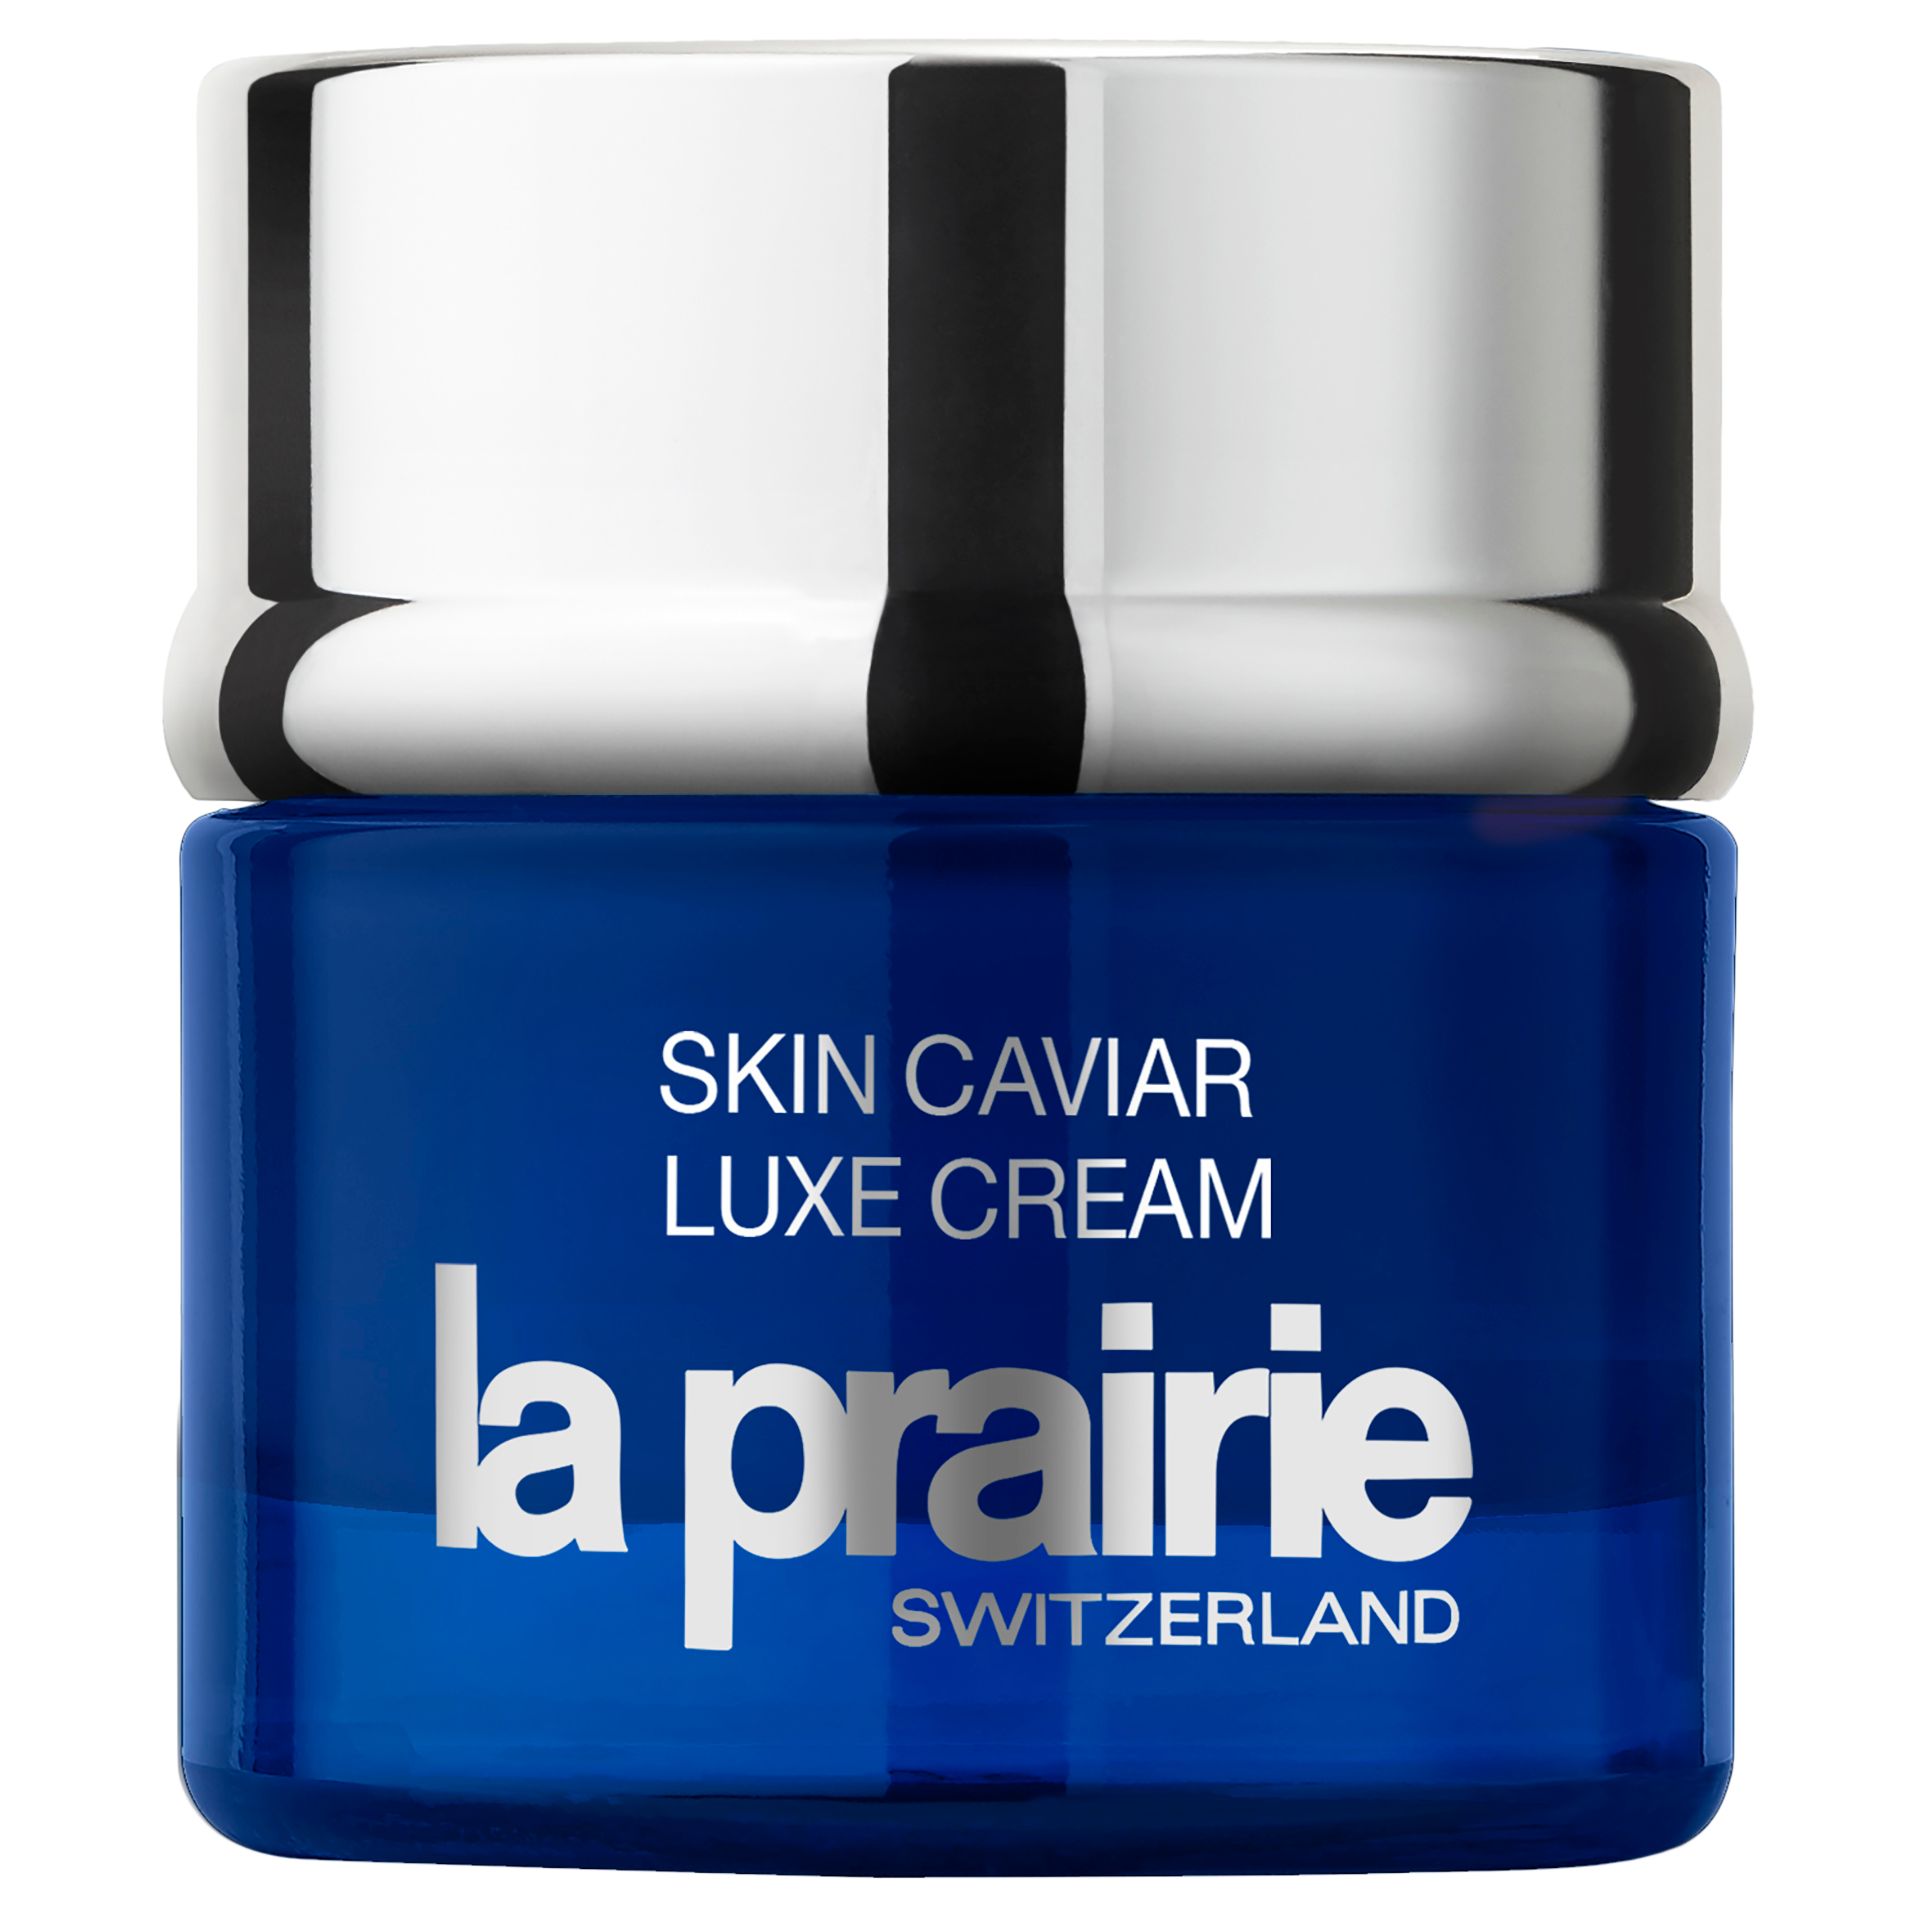 La Prairie Skin Caviar Luxe Cream at John Lewis & Partners